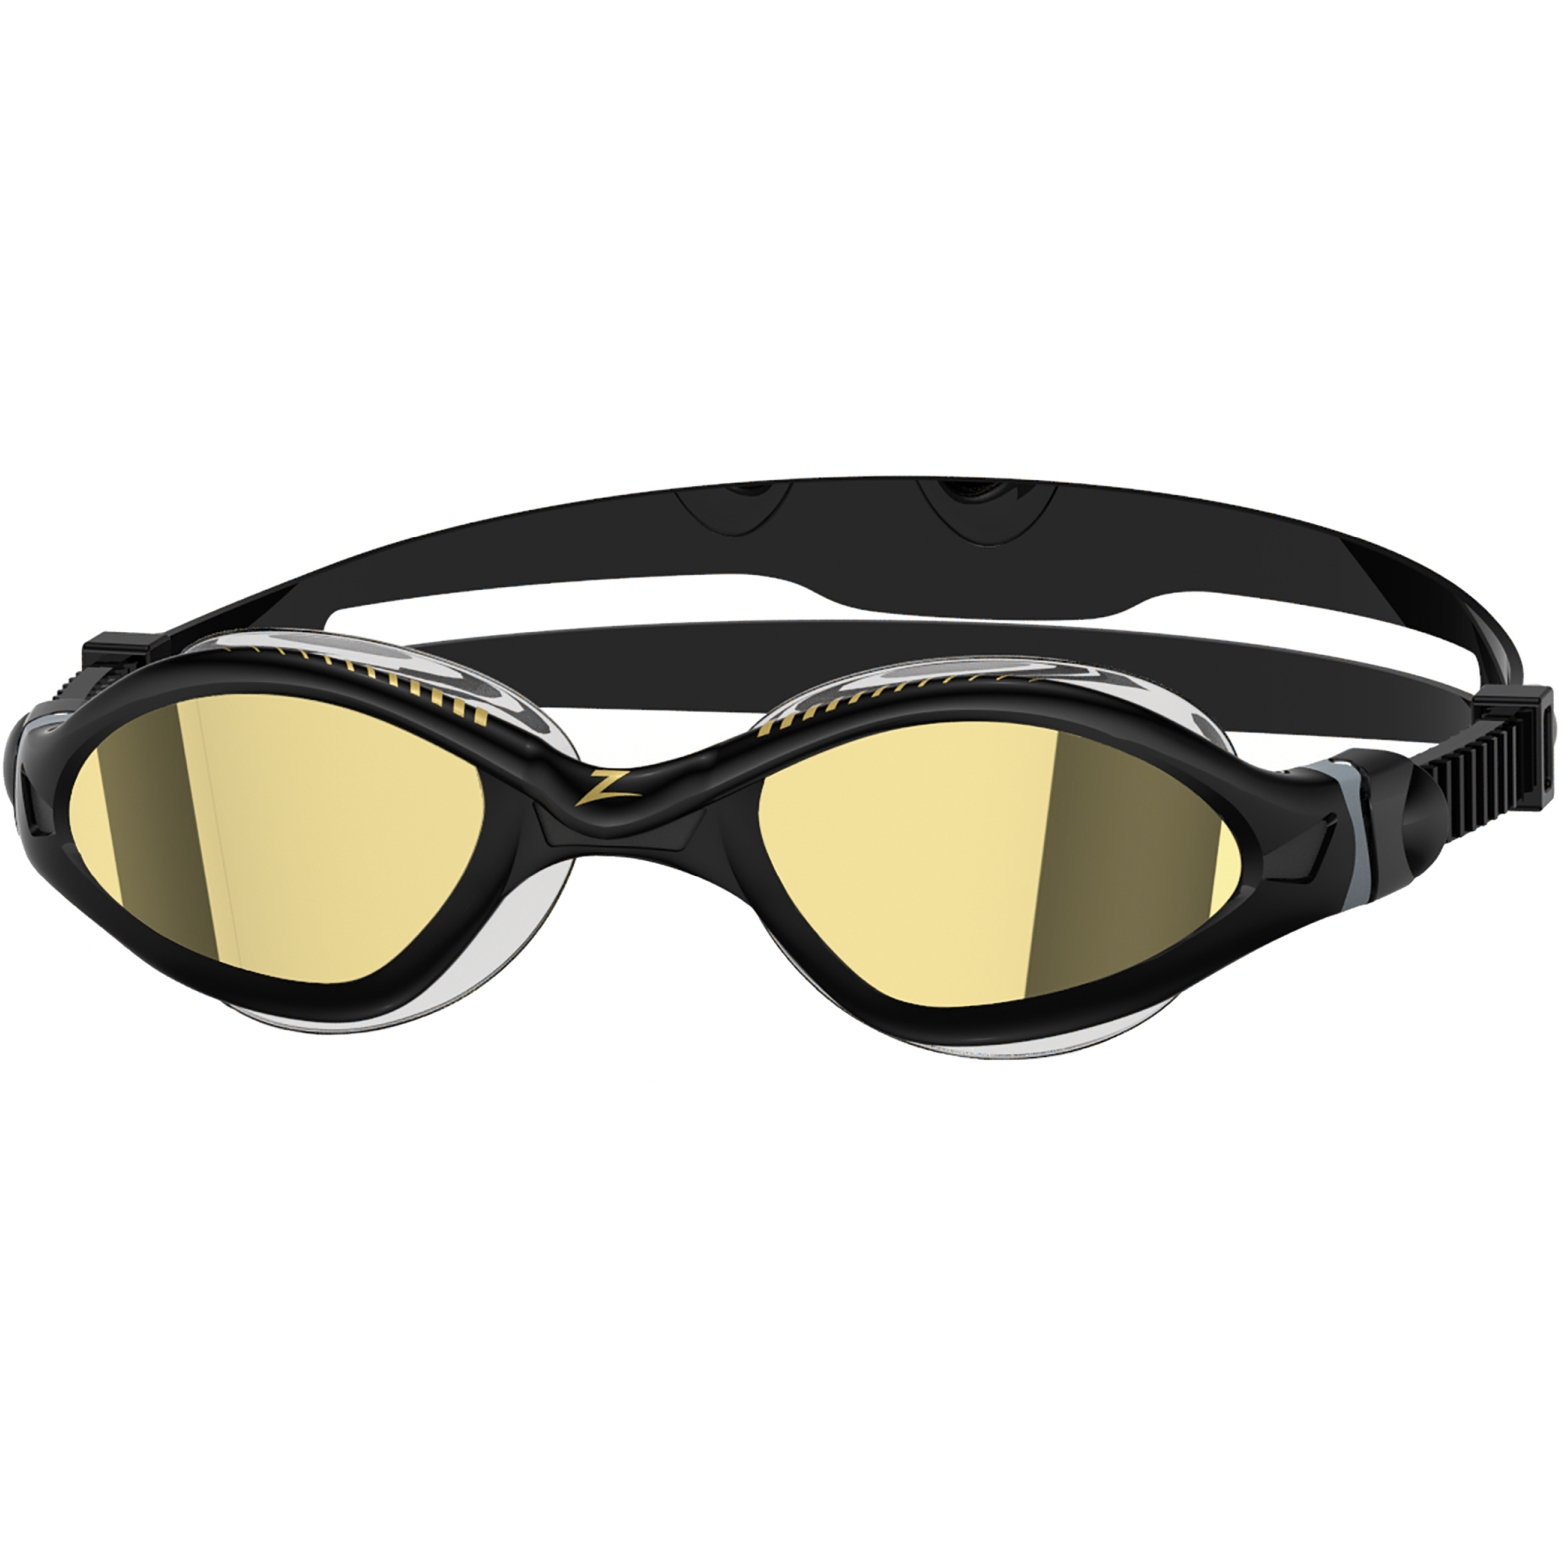 Productfoto van Zoggs Tiger LSR+ Mirror Swim Goggles - Black/Grey/Mirrored Gold